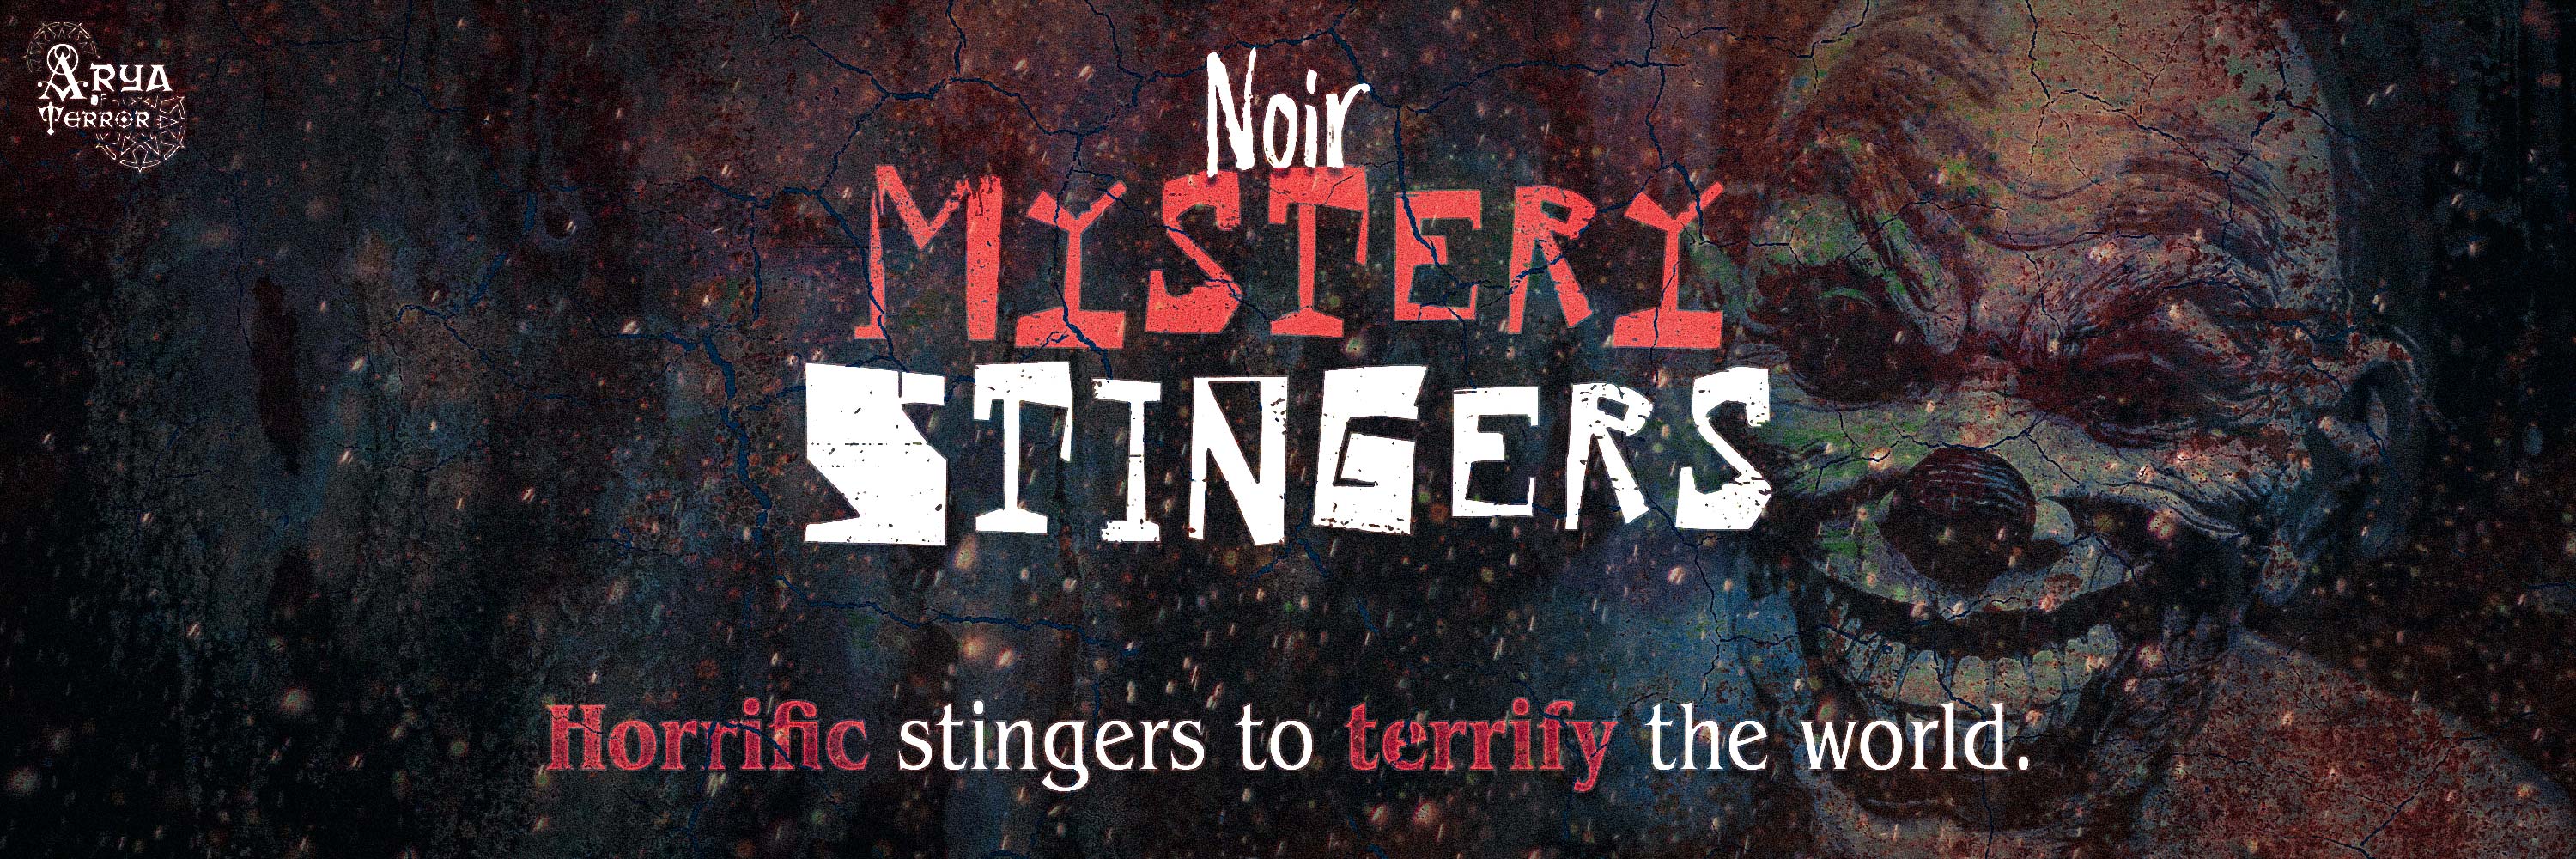 Noir Mystery Stingers